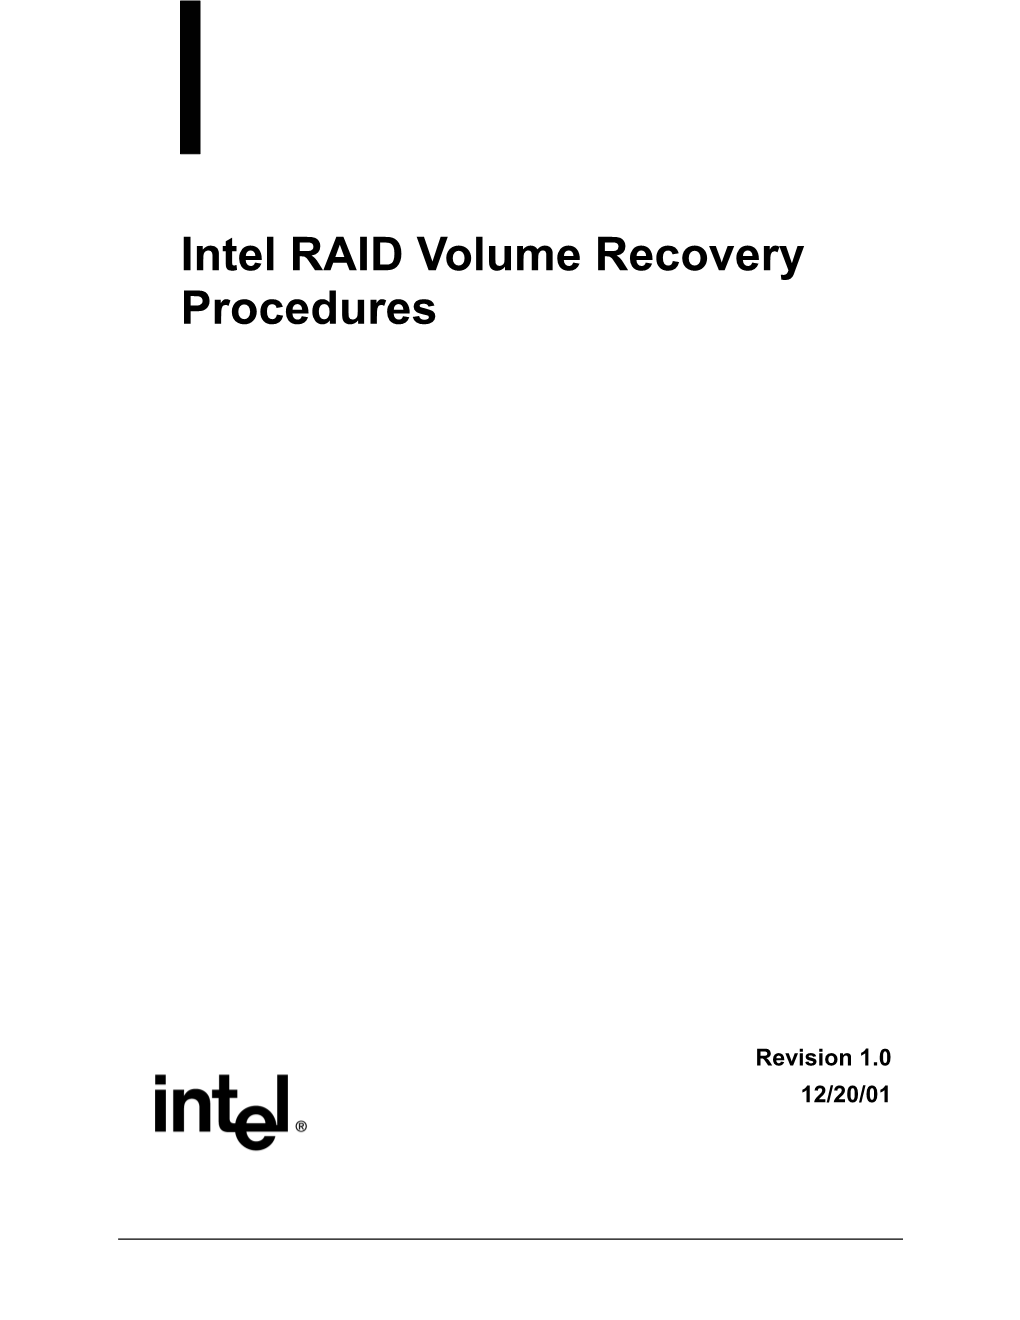 Intel RAID Volume Recovery Procedures